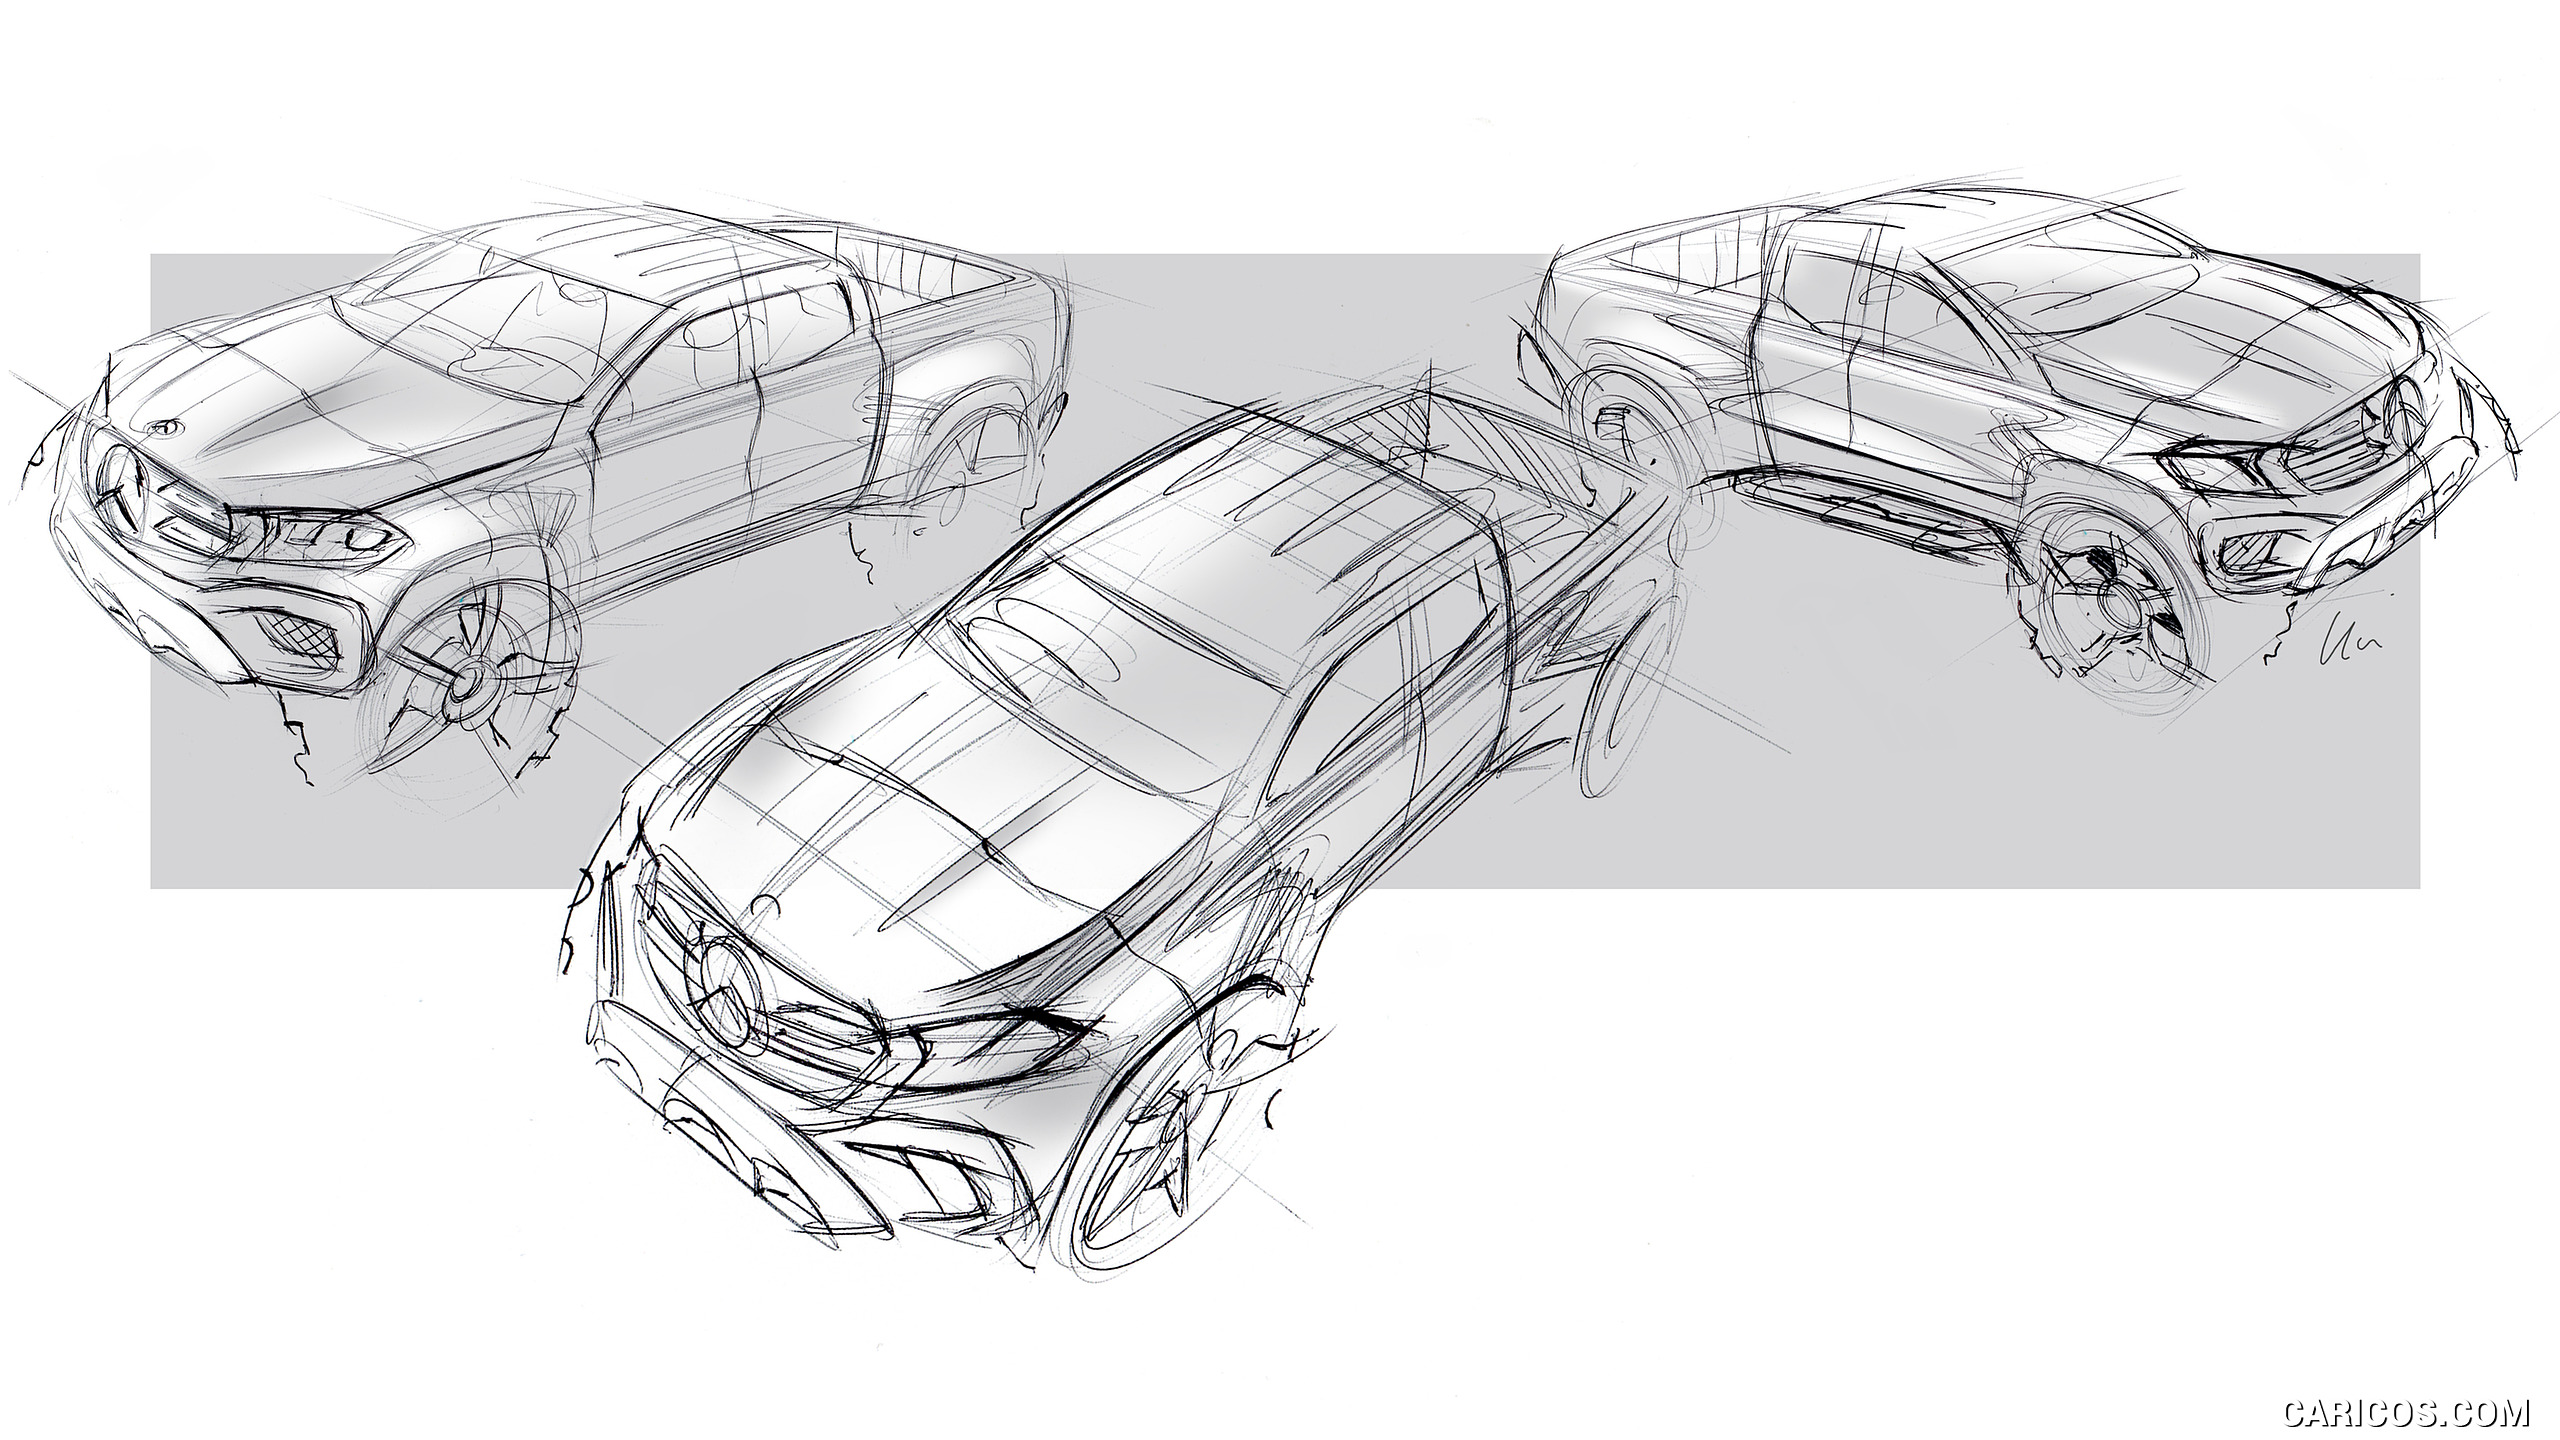 2018 Mercedes-Benz X-Class Pickup - Design Sketch, #99 of 99